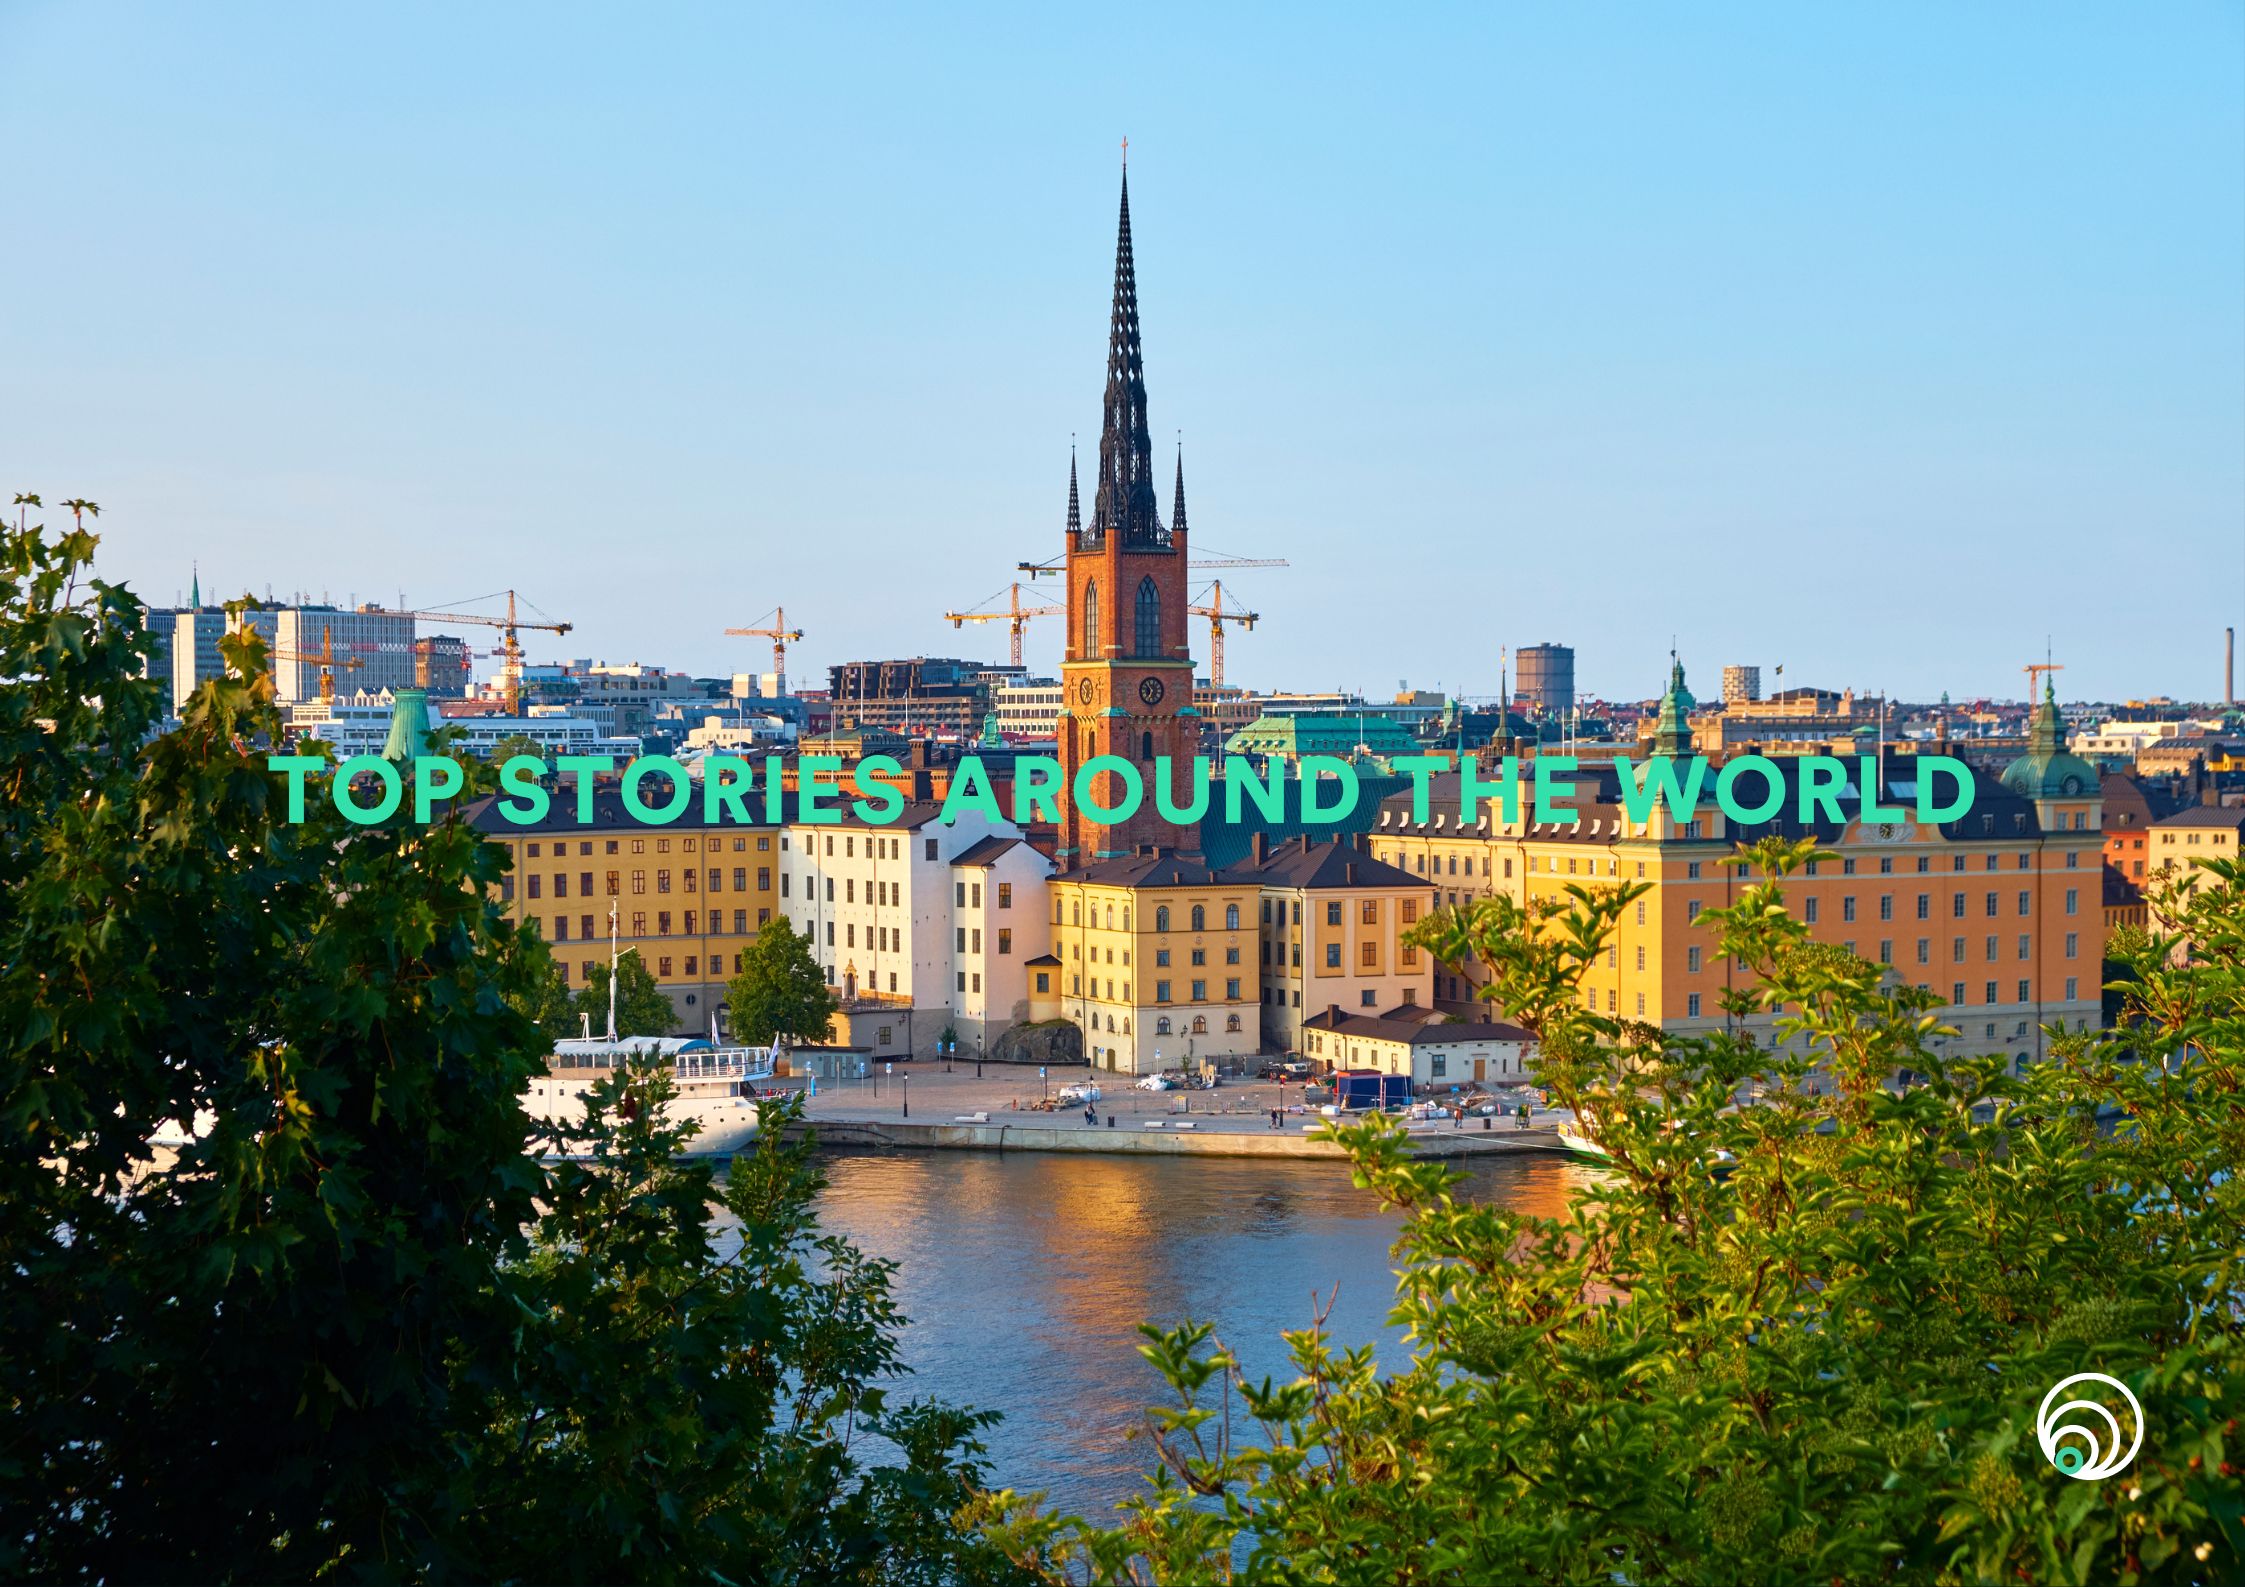 TOP STORIES AROUND THE WORLD